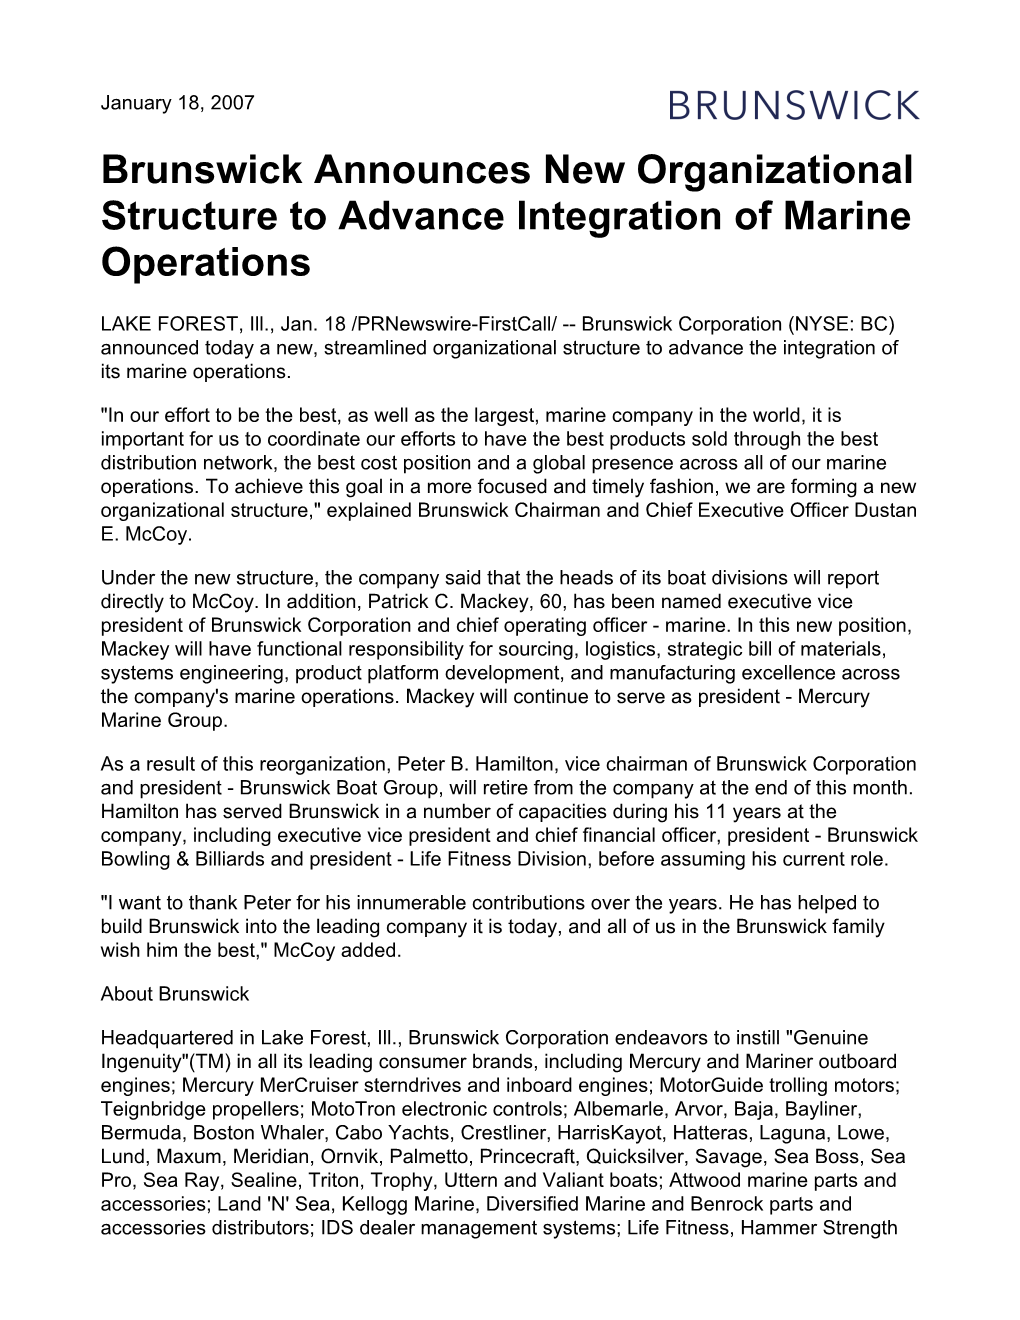 Brunswick Announces New Organizational Structure to Advance Integration of Marine Operations